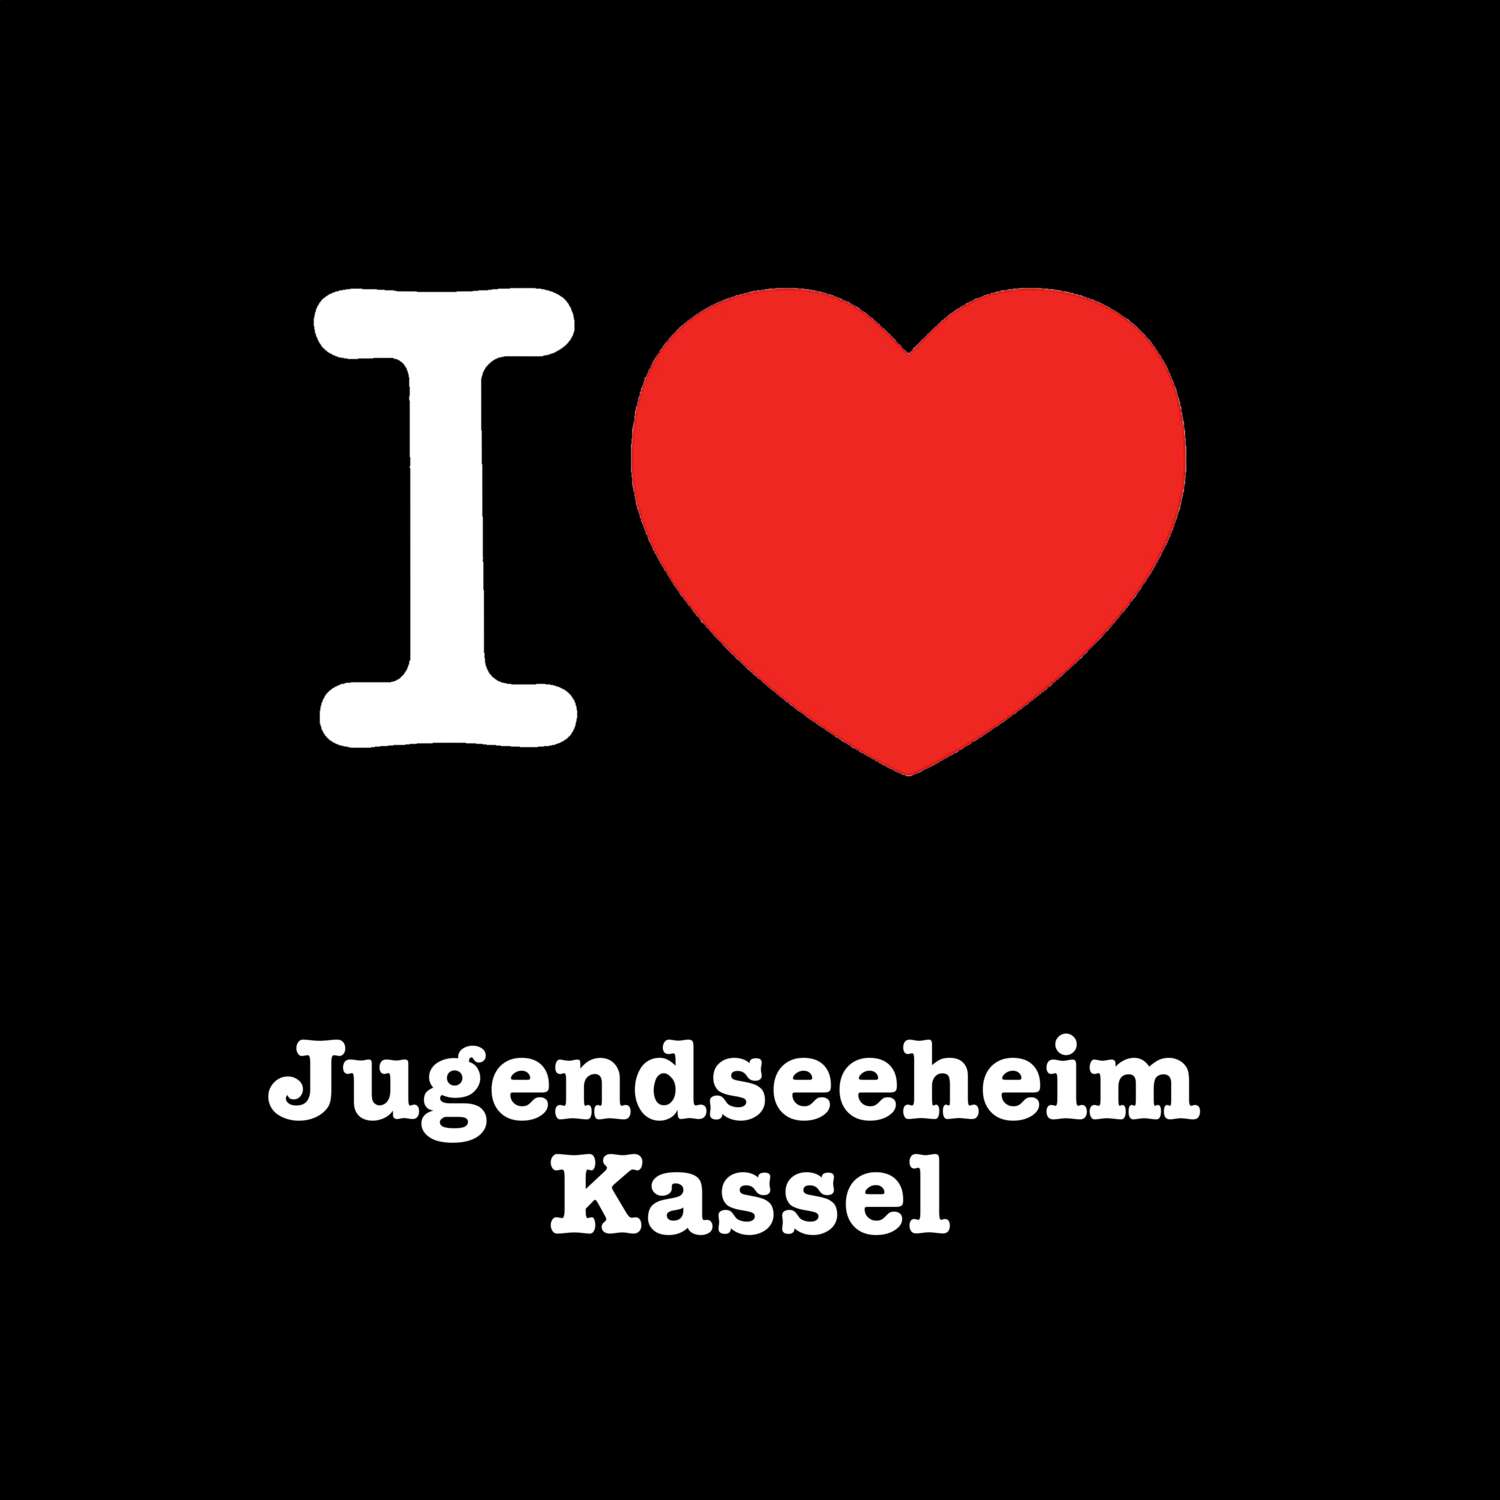 Jugendseeheim Kassel T-Shirt »I love«